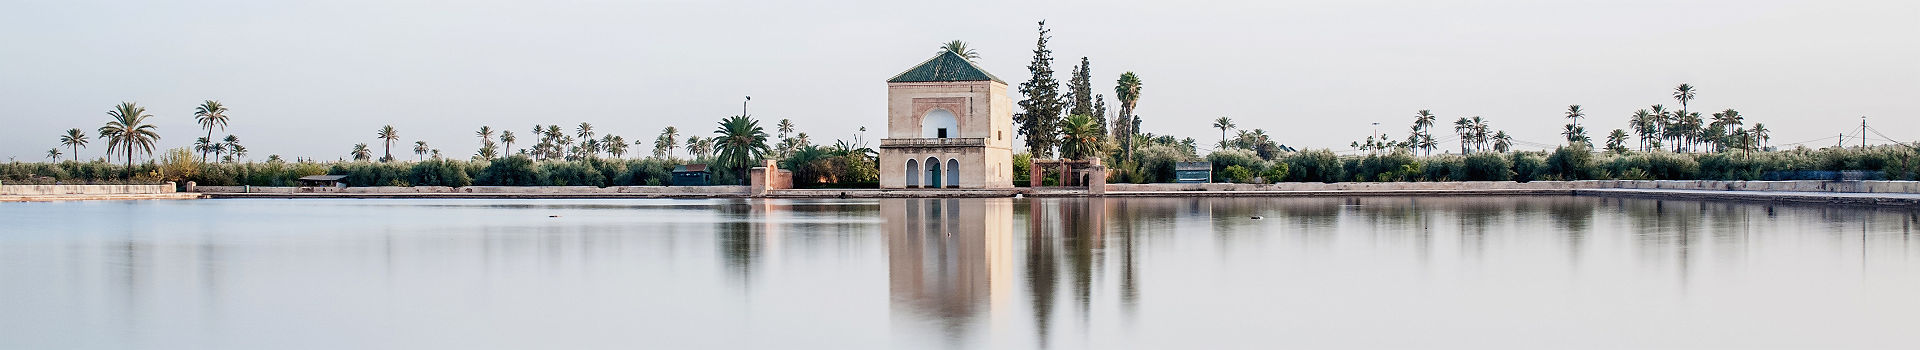 Pavillon du jardin Menara à Marrakech, au Maroc